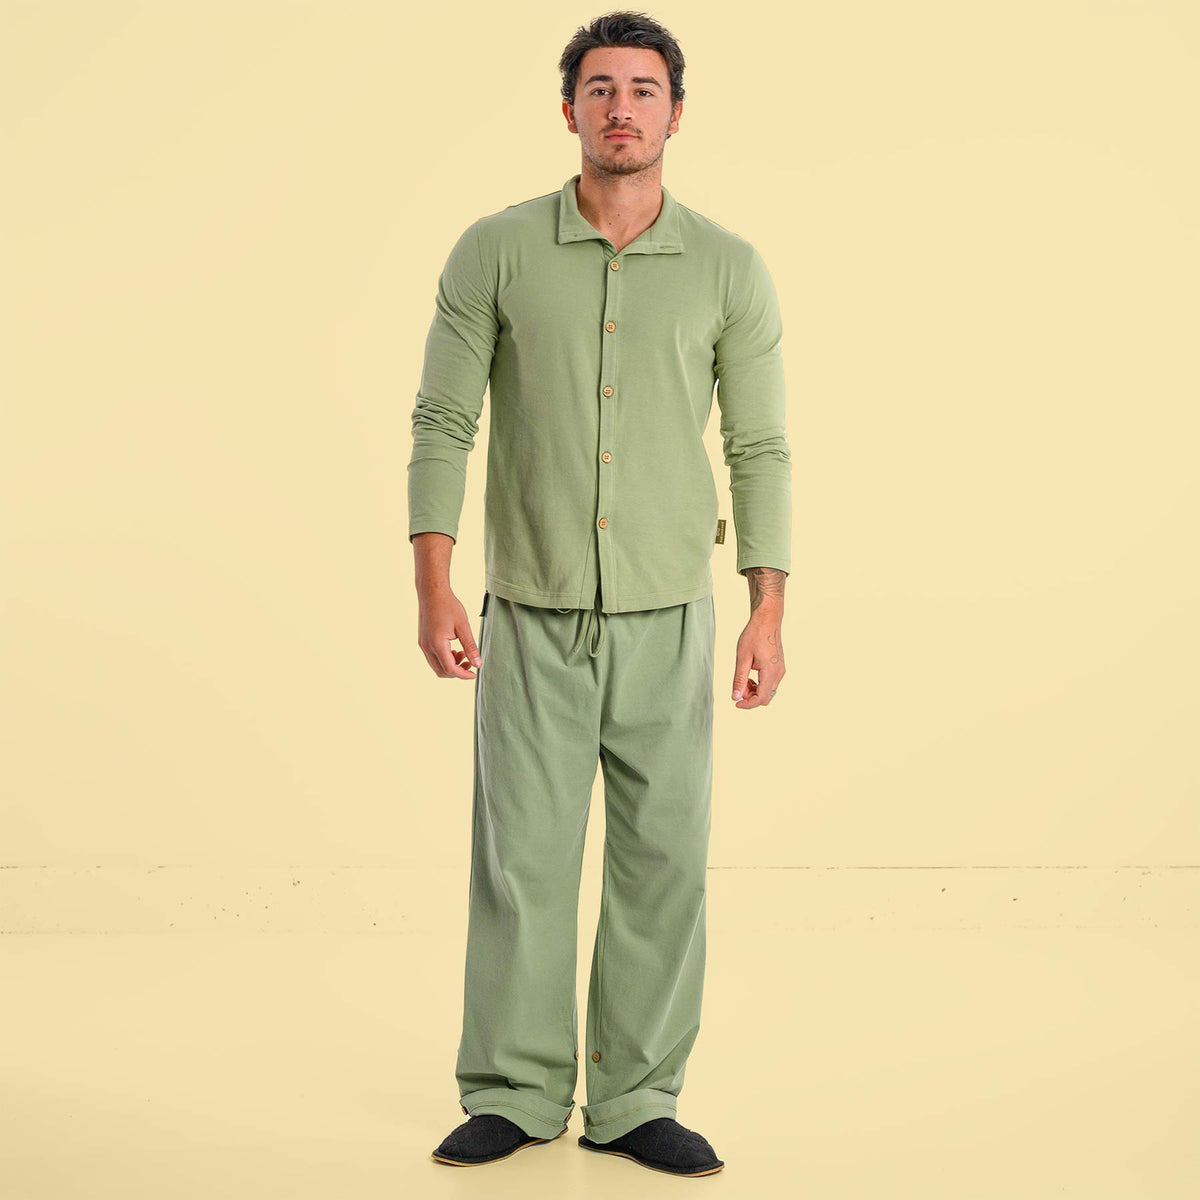 Eco friendly 100% Organic Cotton Knit Jersey Pajamas Set by